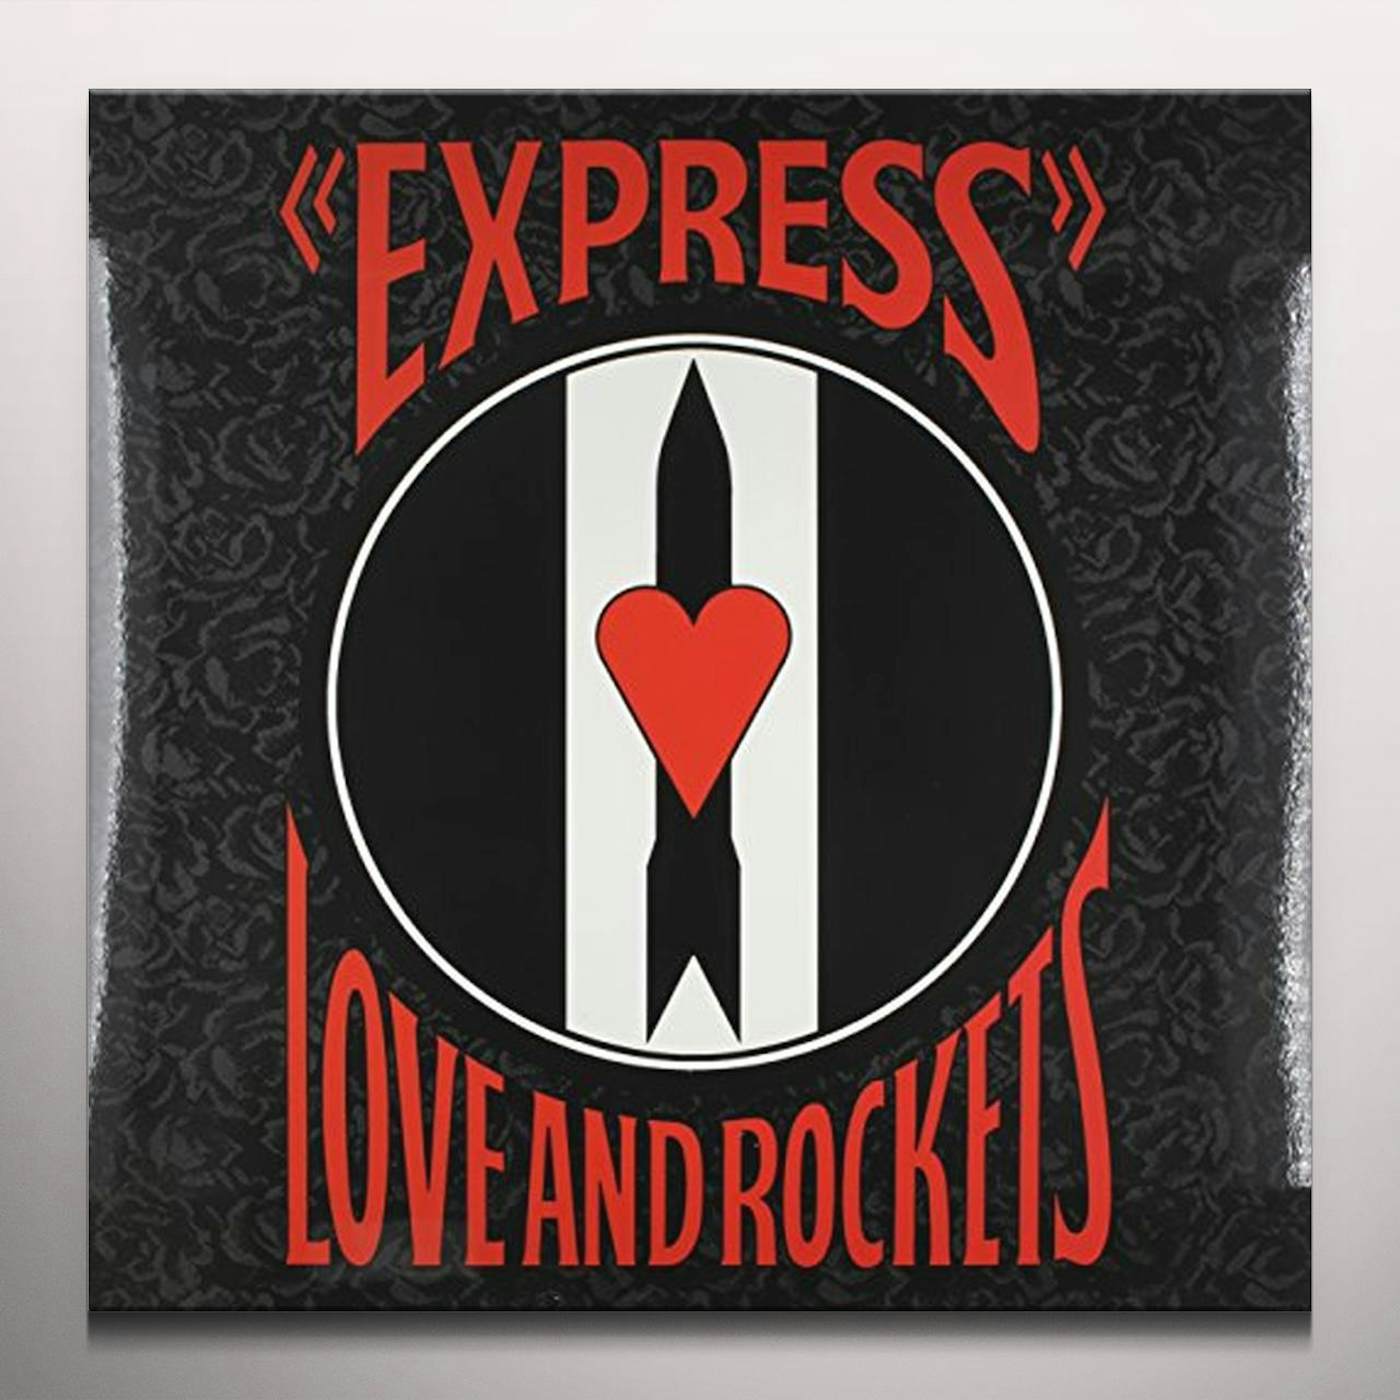 Love and Rockets Express Vinyl Record